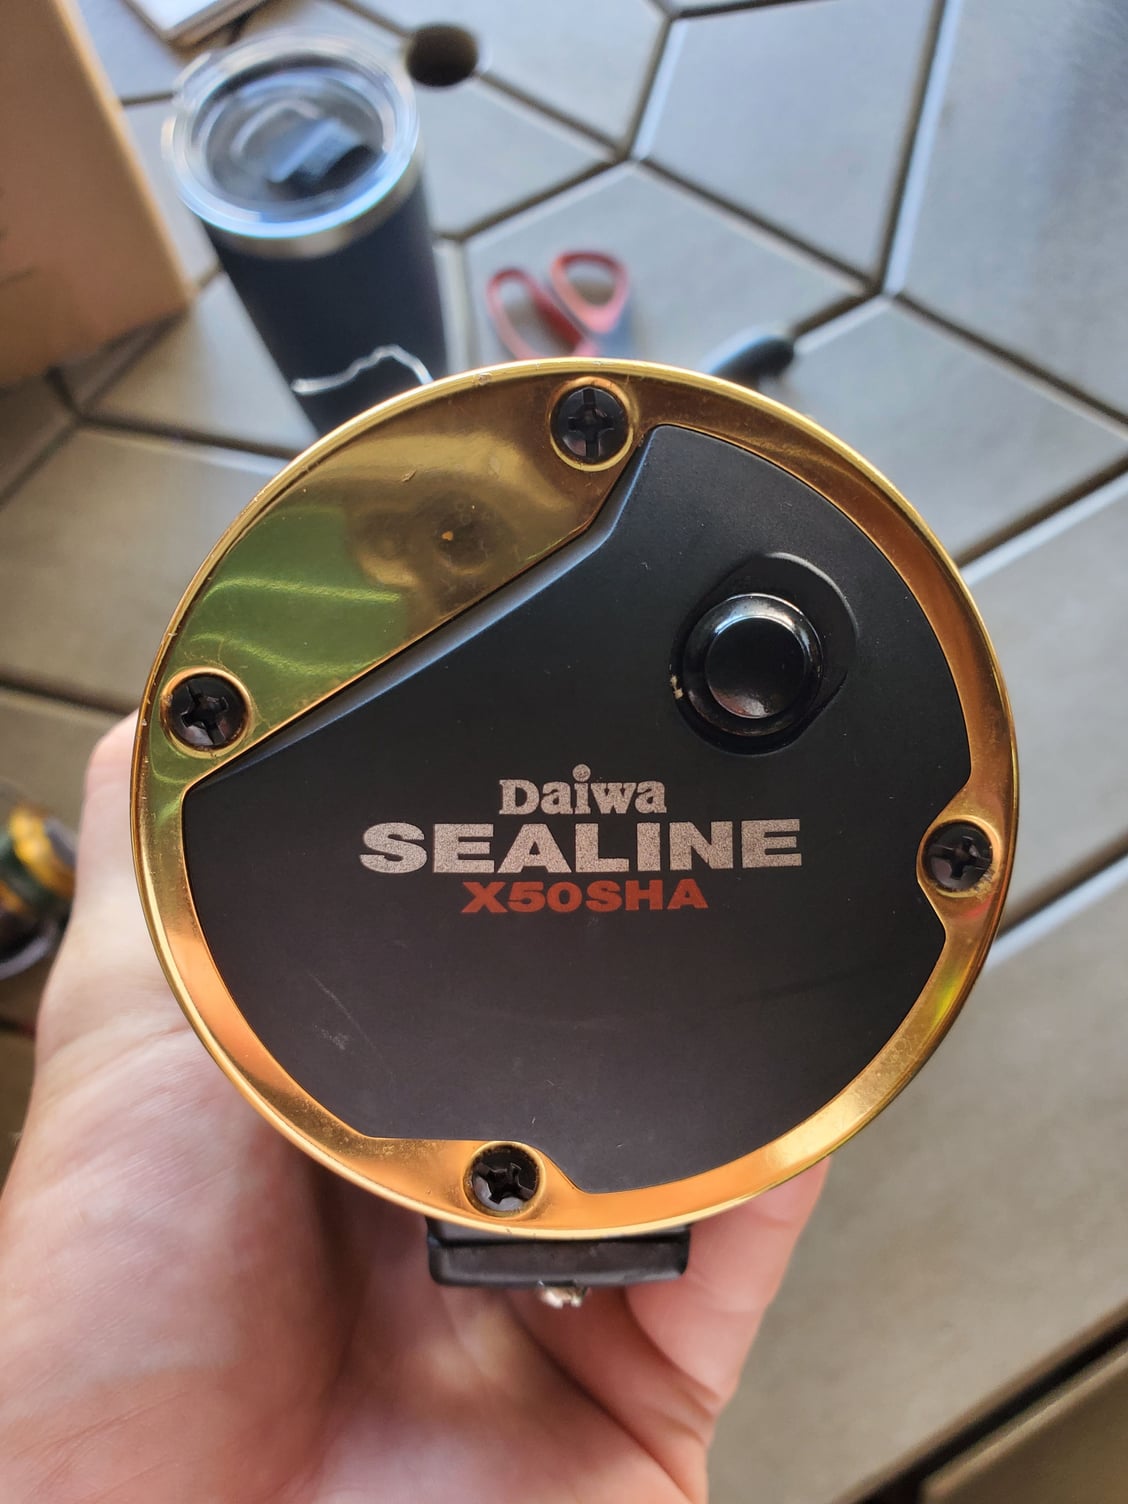 Older Daiwa Sealine reels..